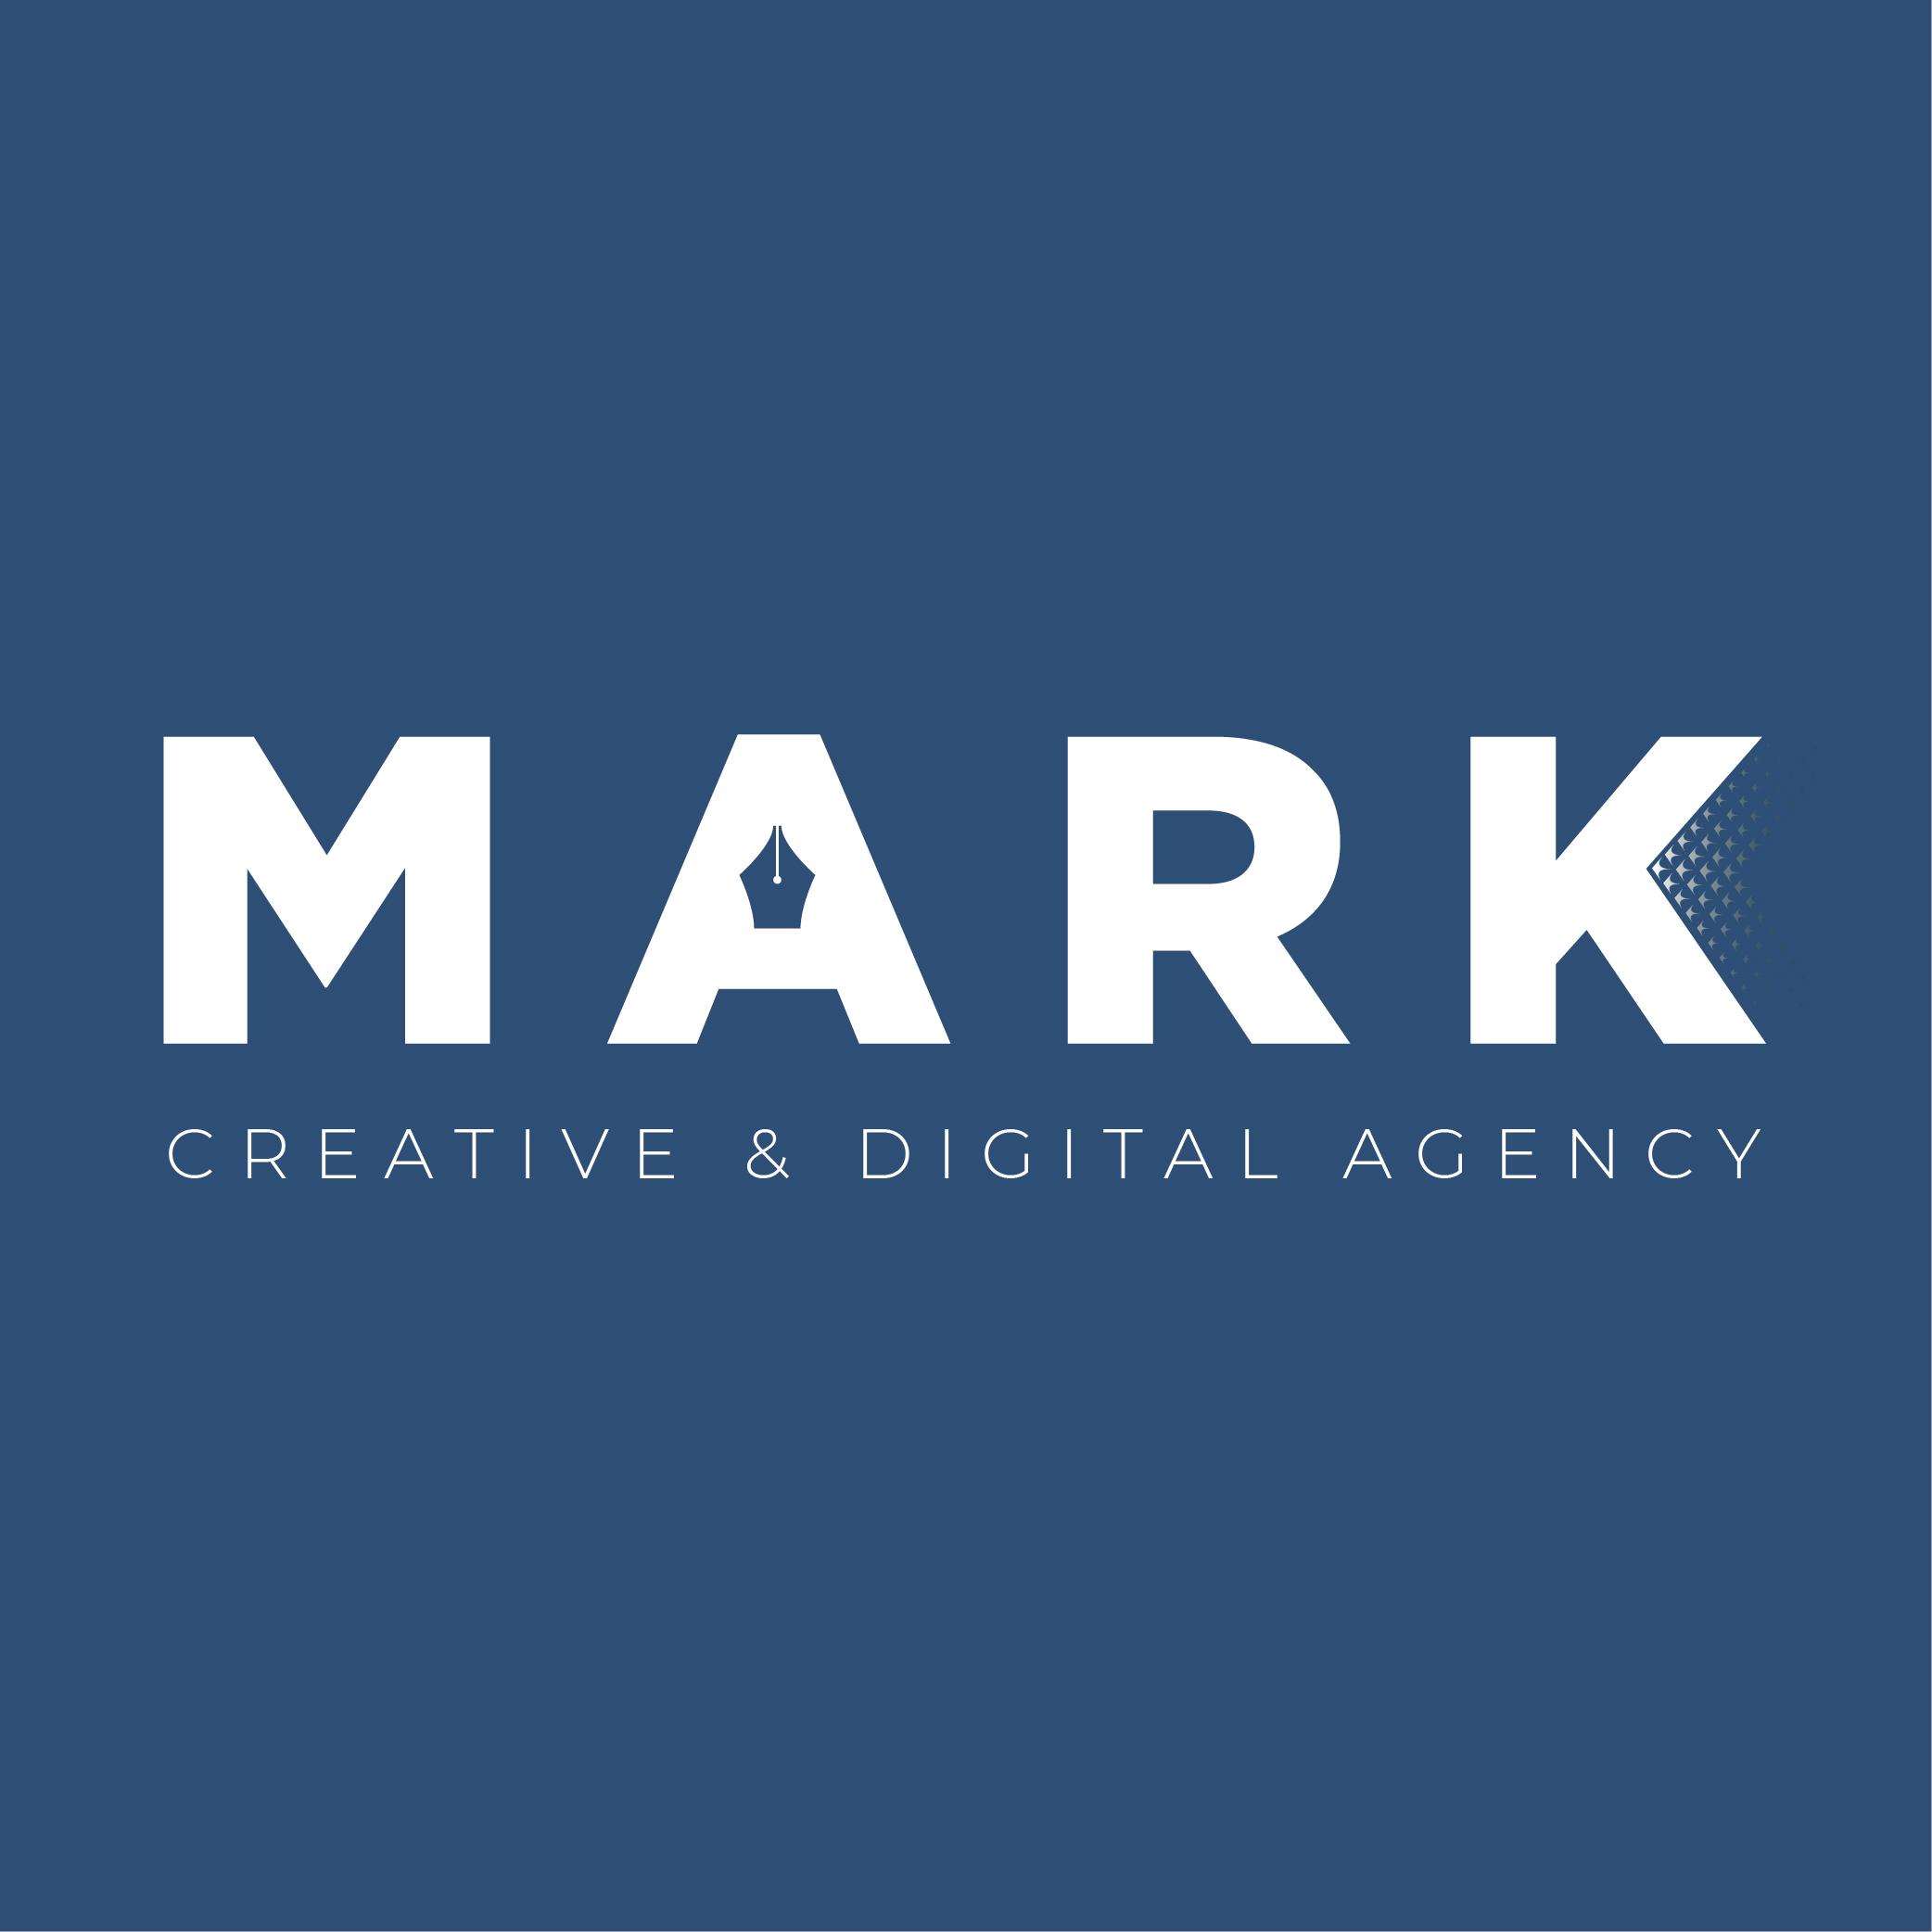 Mark - Creative & Digital Agency profile on Qualified.One